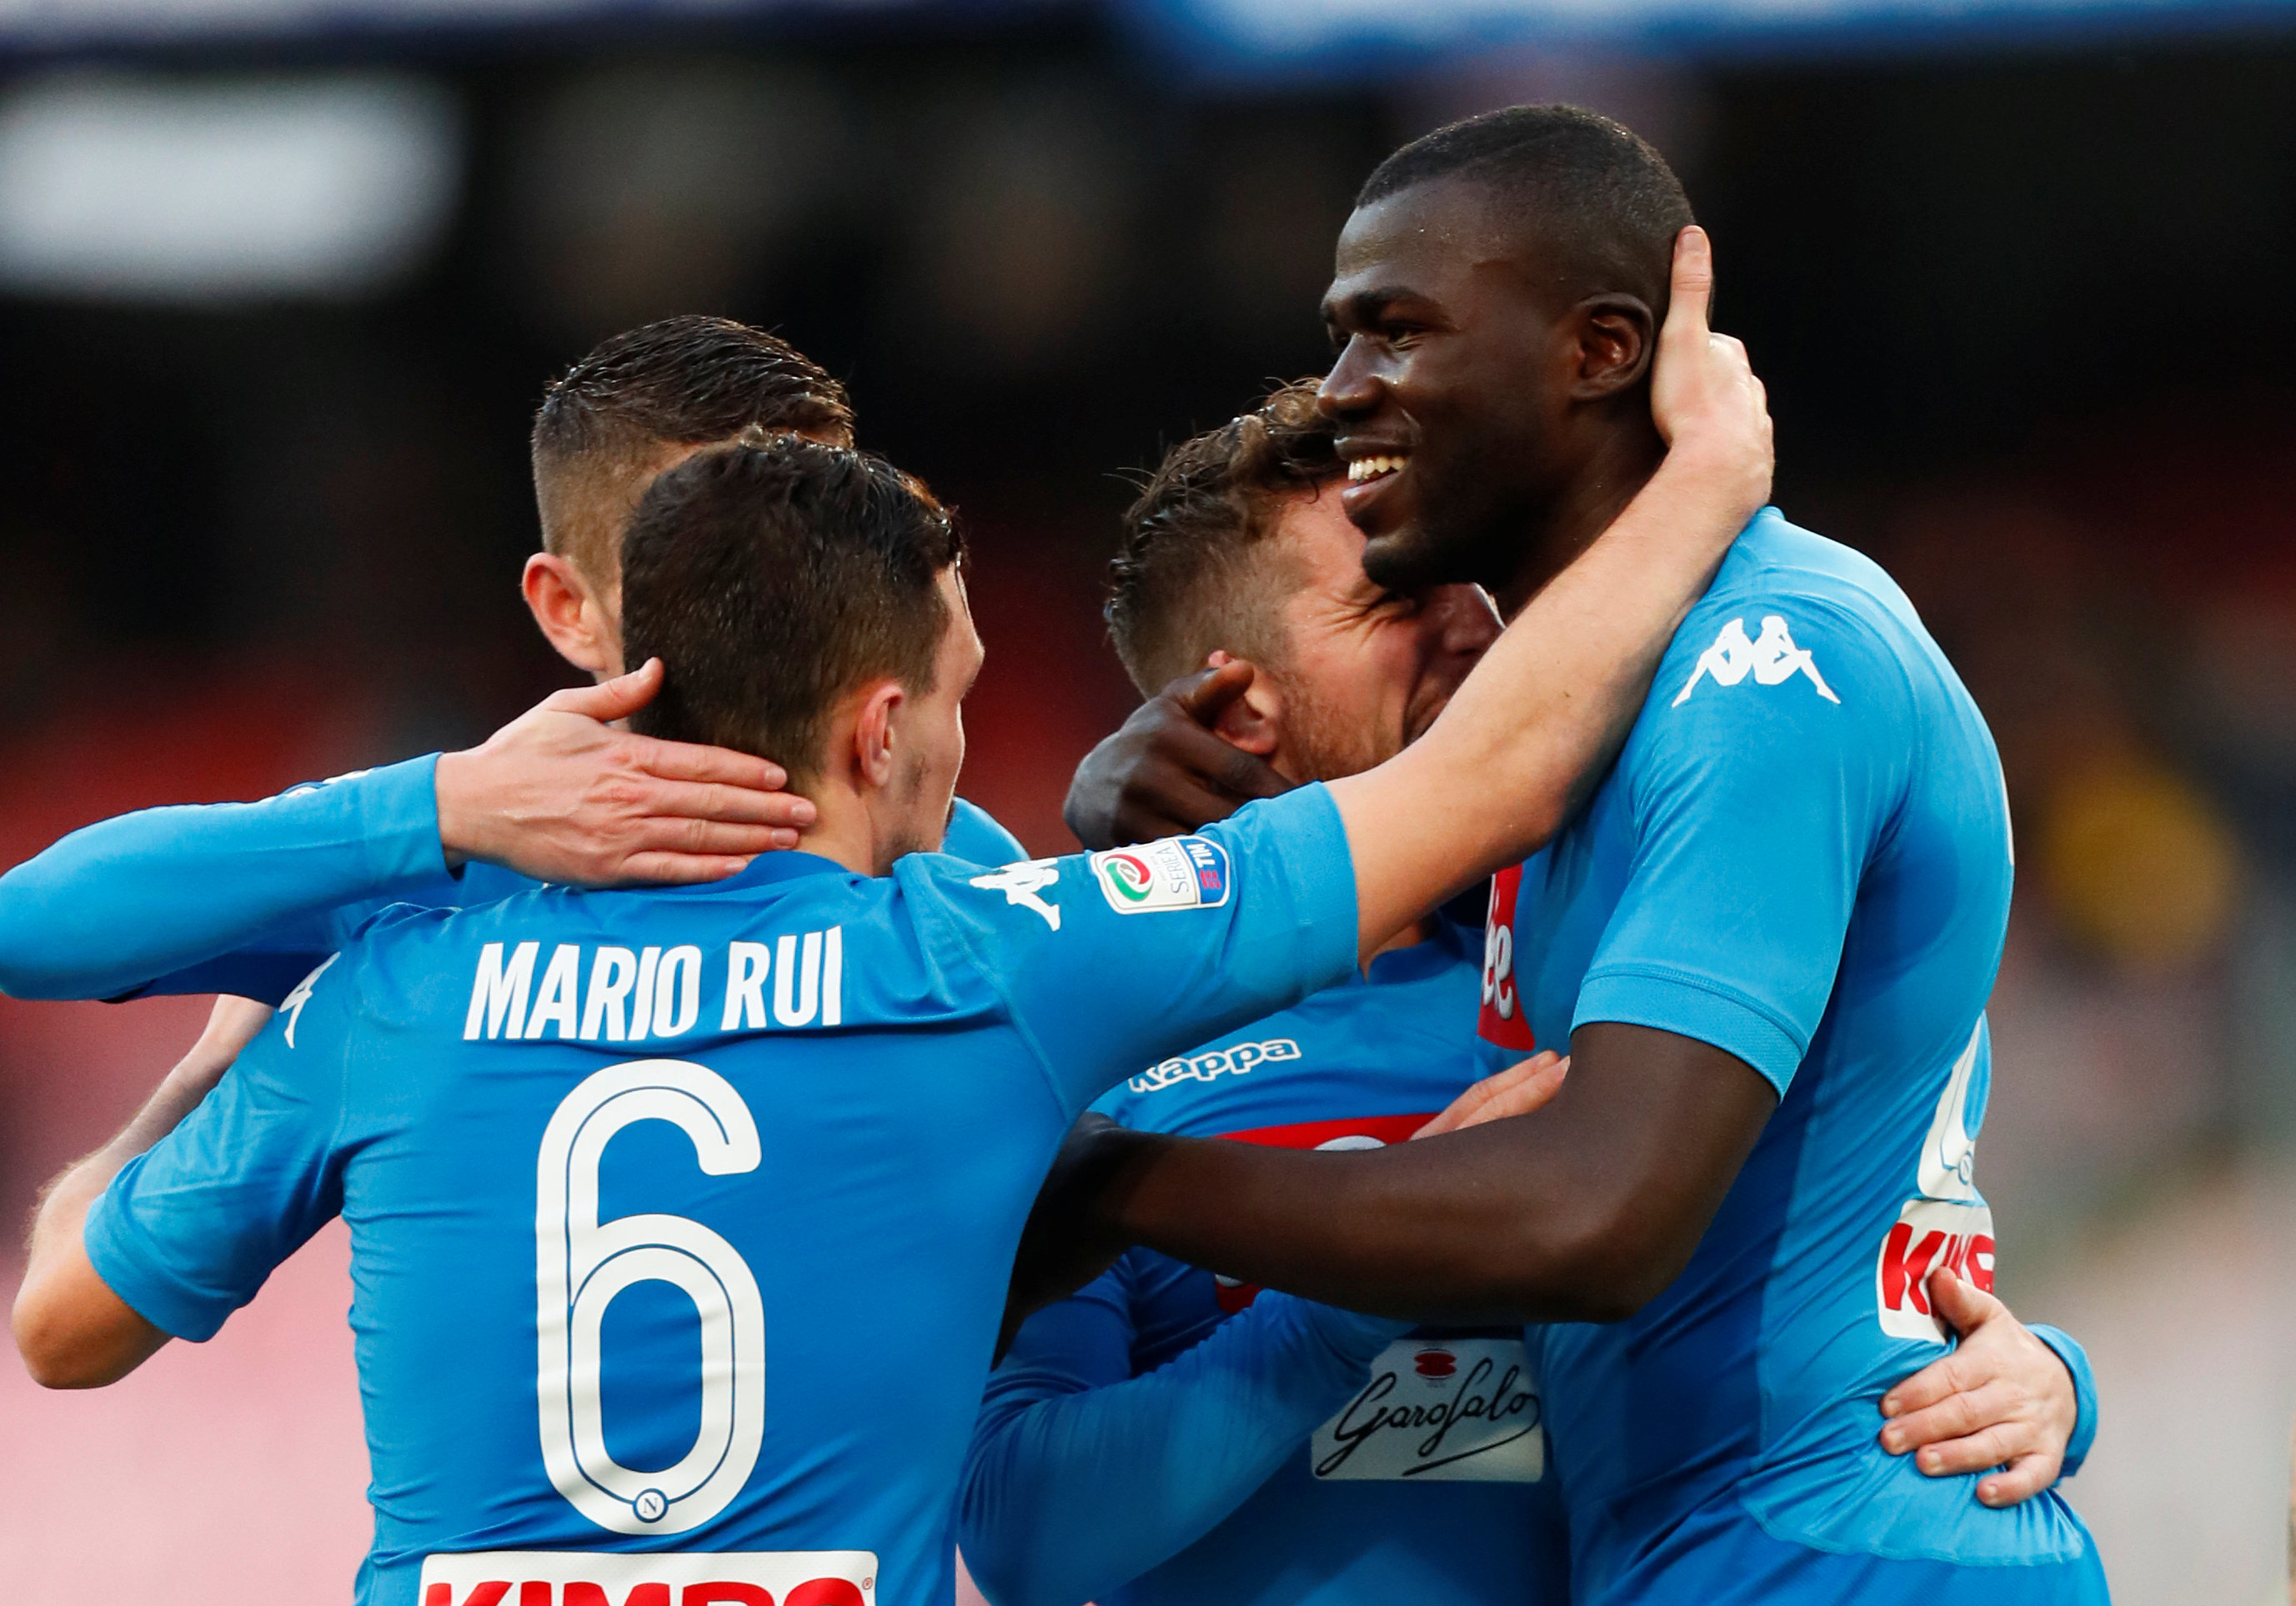 Niềm vui của các cầu thủ Napoli sau khi Koulibaly mở tỉ số. Ảnh: REUTERS